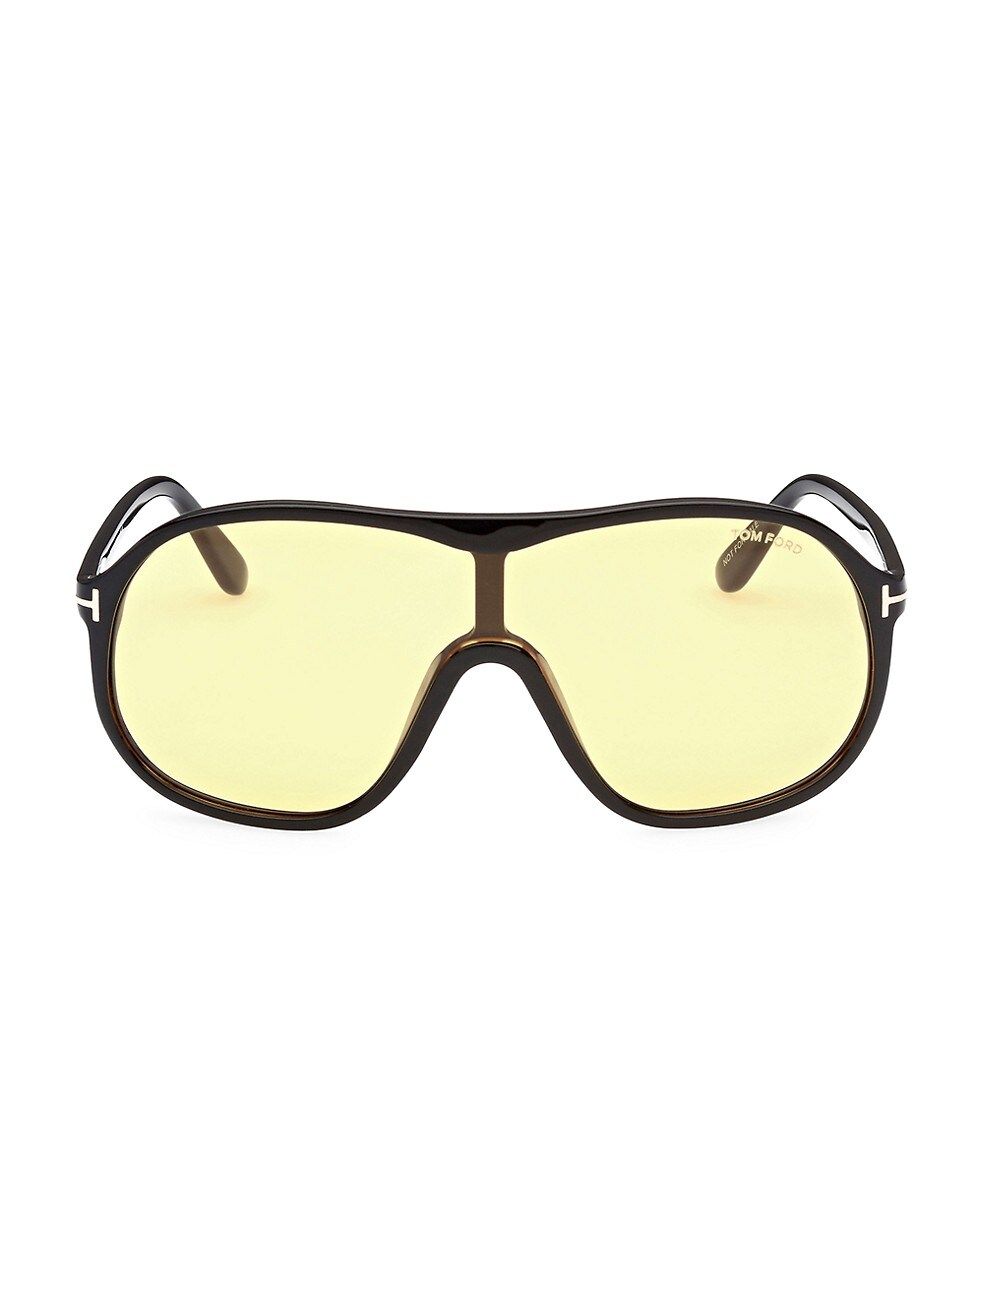 Tom Ford Drew Pilot Sunglasses | Saks Fifth Avenue